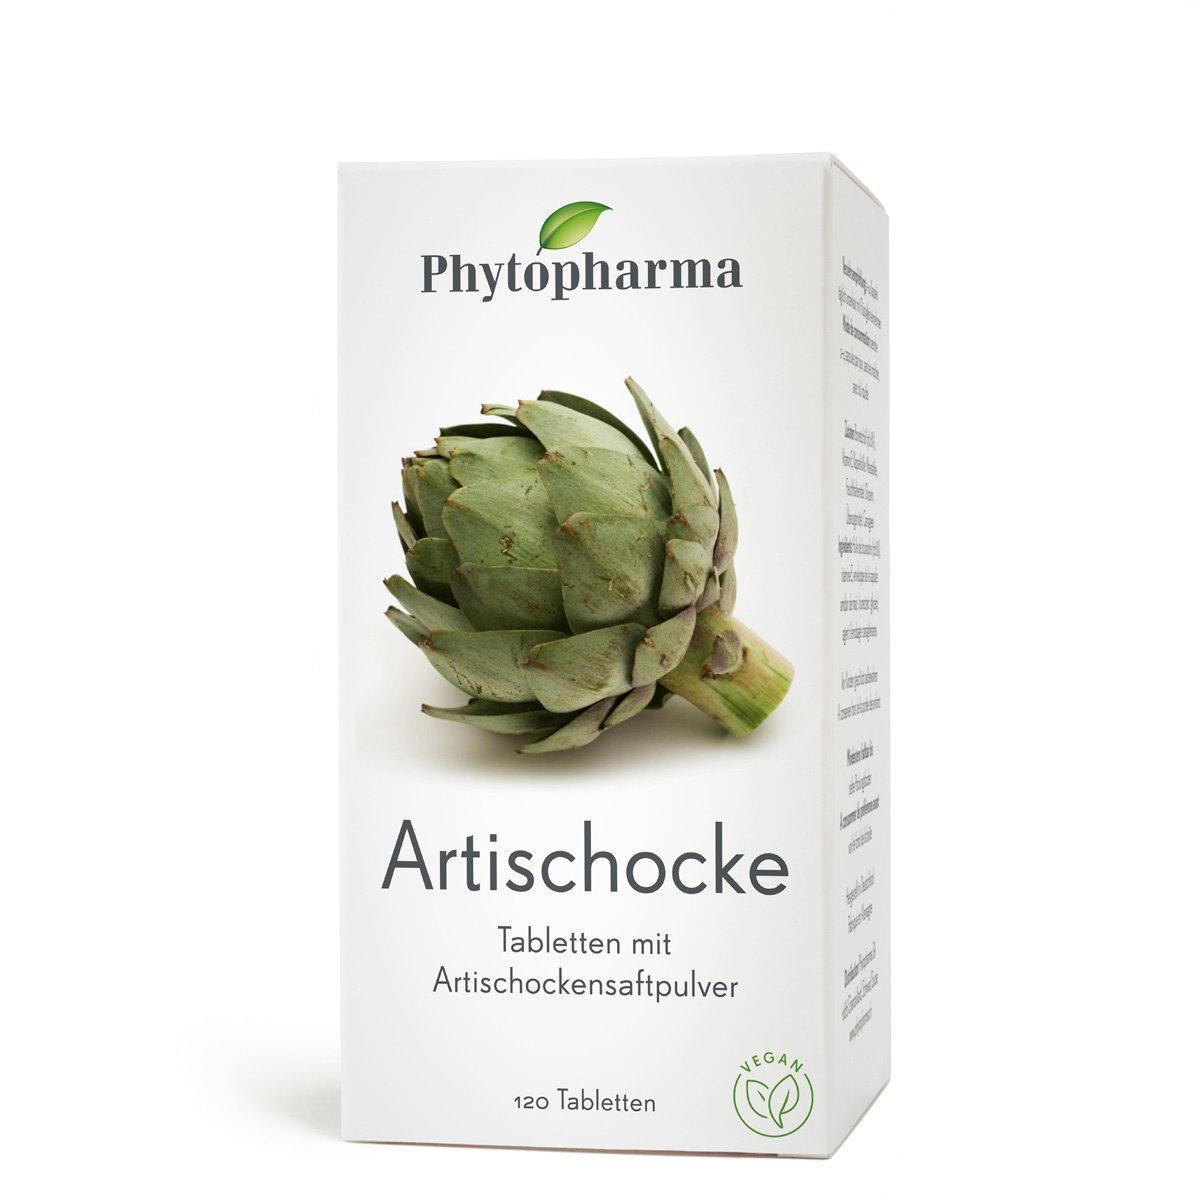 Image of Phytopharma Artischocke Tabletten für Leber und Galle Vegan Artischocke Tabletten - 120Stück